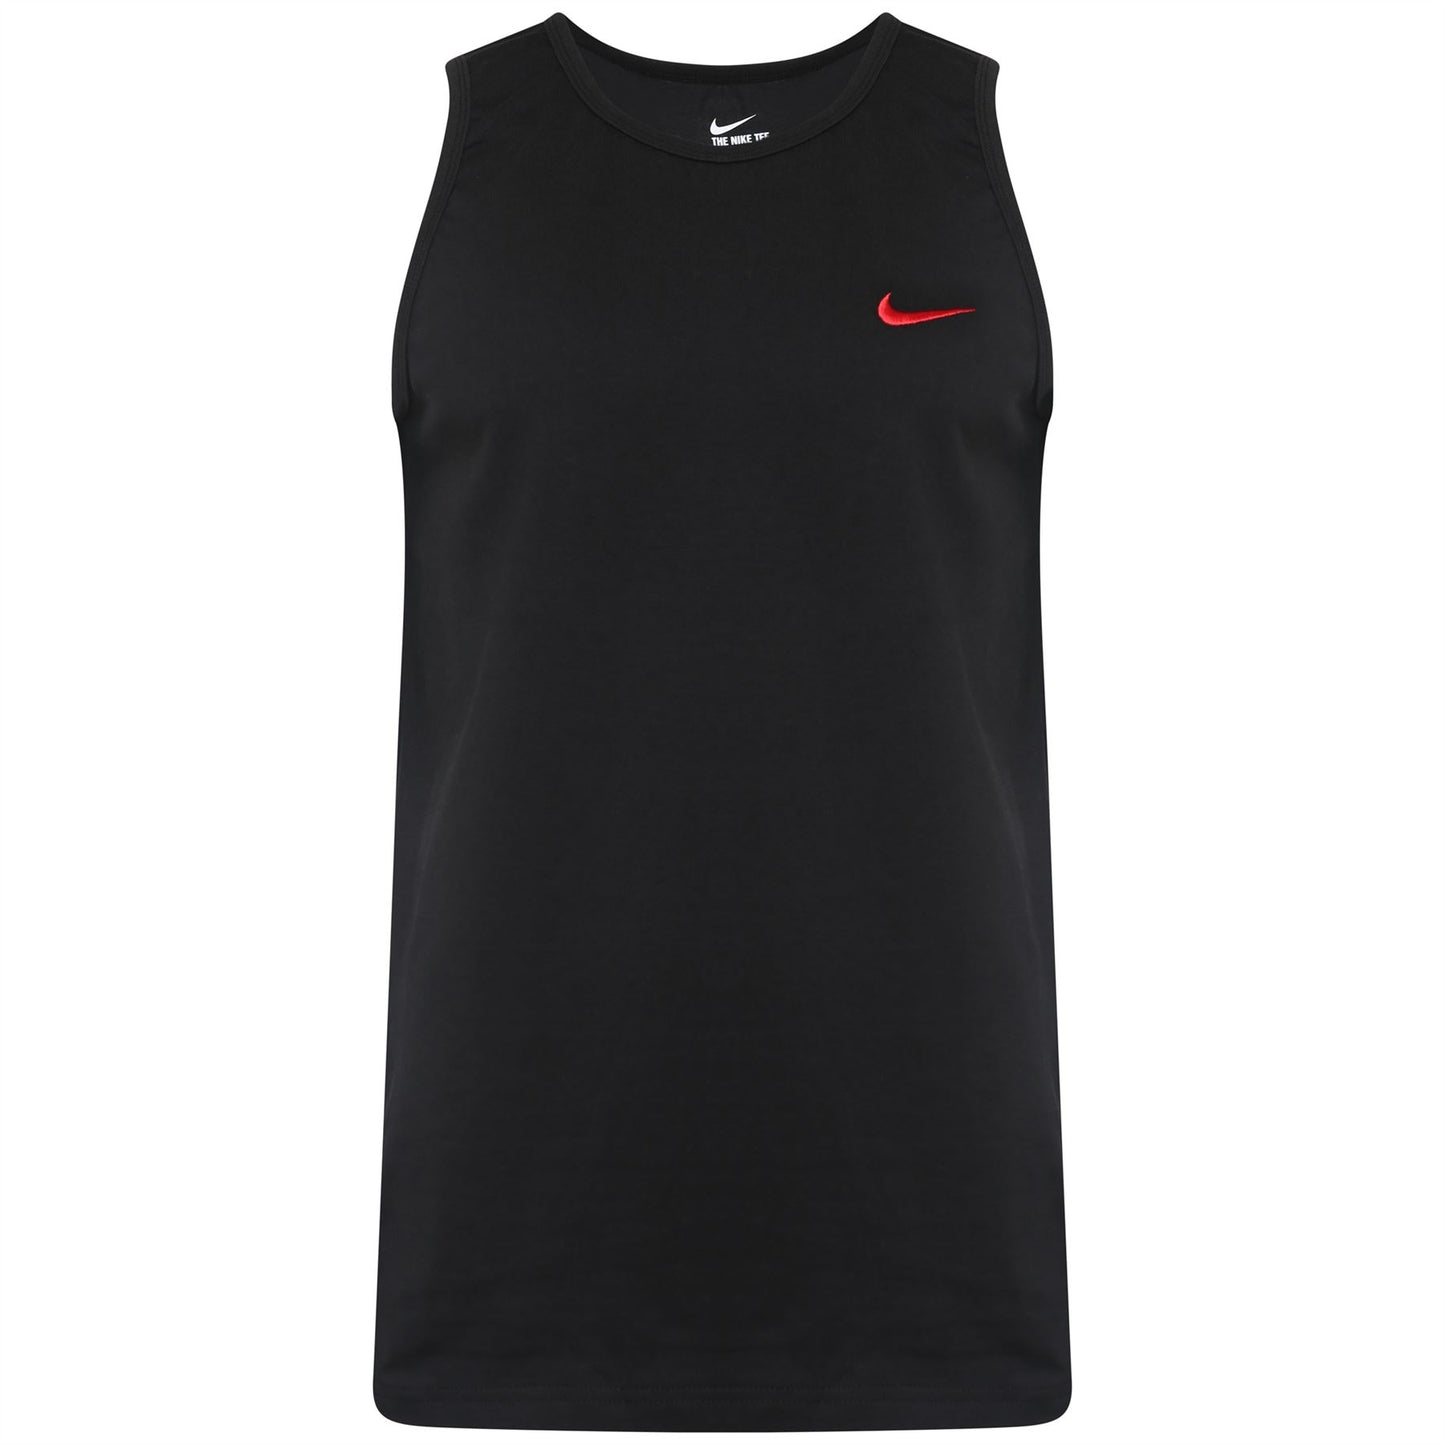 Nike Logo Vest Tank Top Sleeveless T-Shirt Singlet